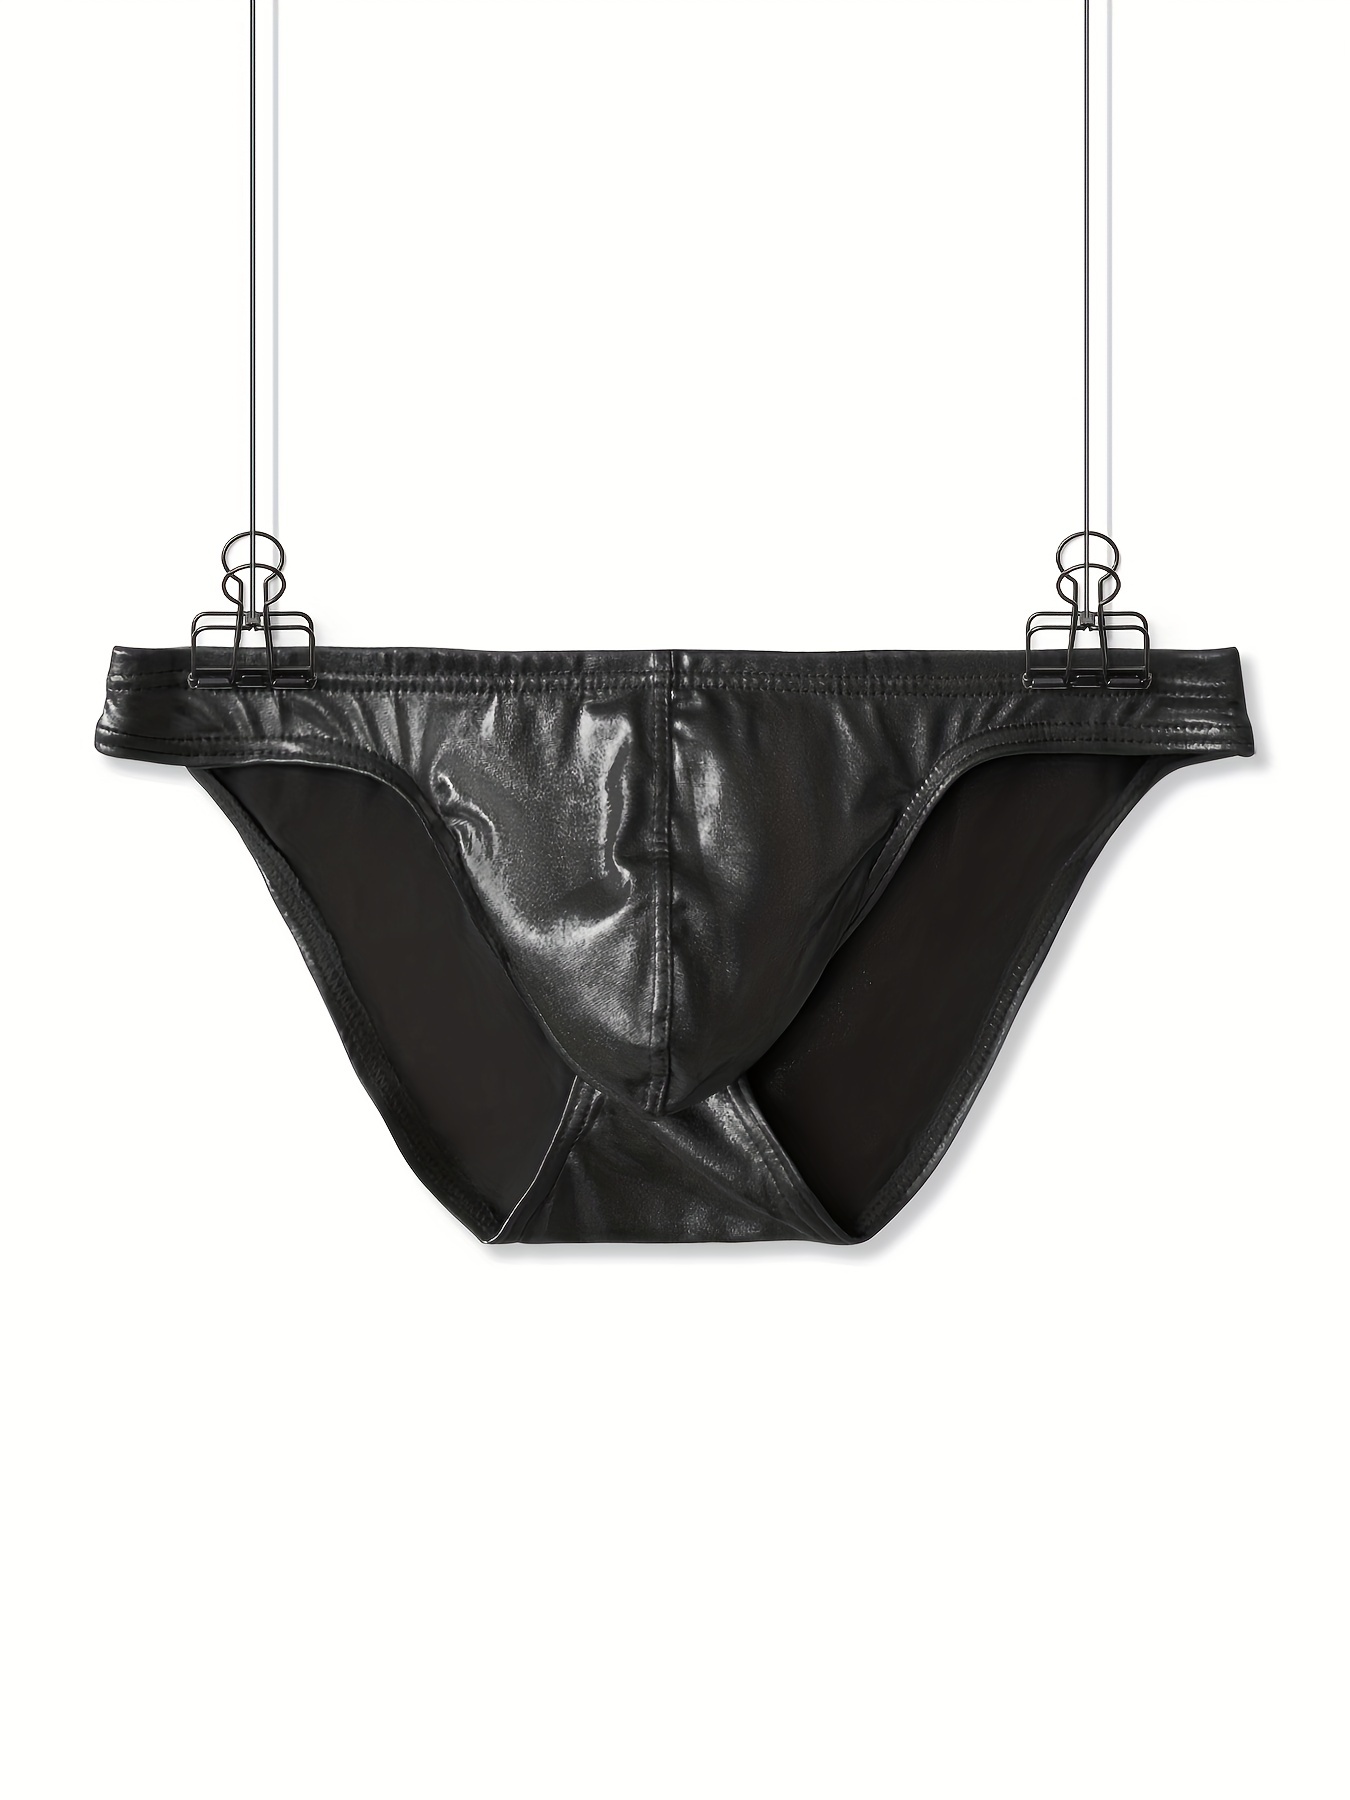 Buy Swbreety Men's Low Rise Faux Leather Underwear Black at